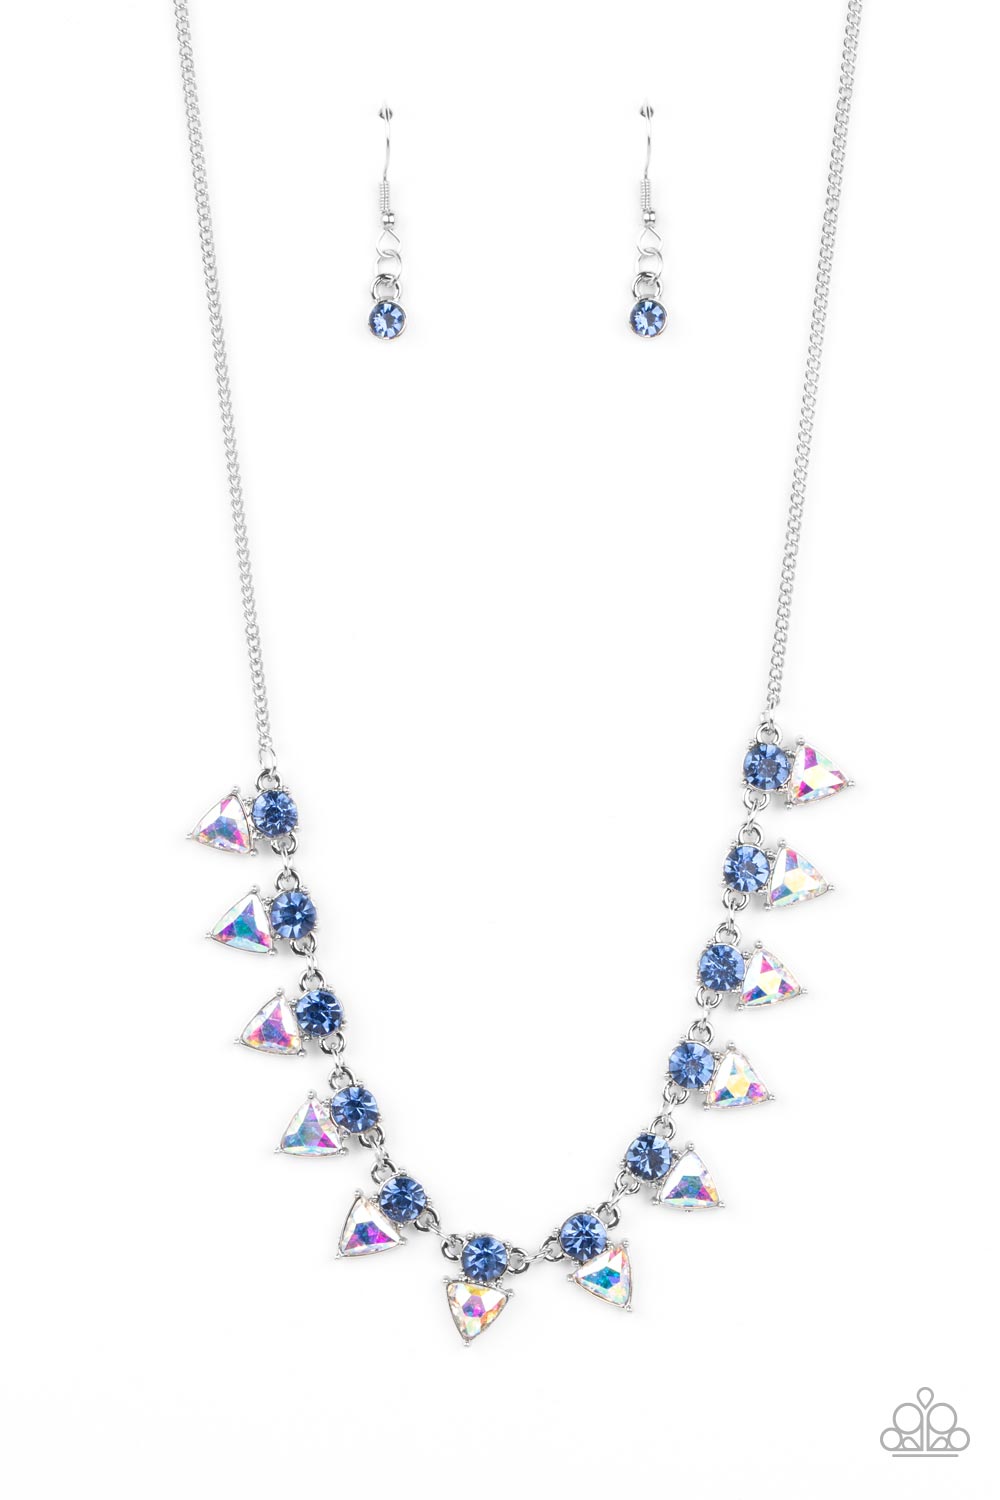 Razor-Sharp Refinement Blue &amp; Iridescent Rhinestone Necklace - Paparazzi Accessories- lightbox - CarasShop.com - $5 Jewelry by Cara Jewels